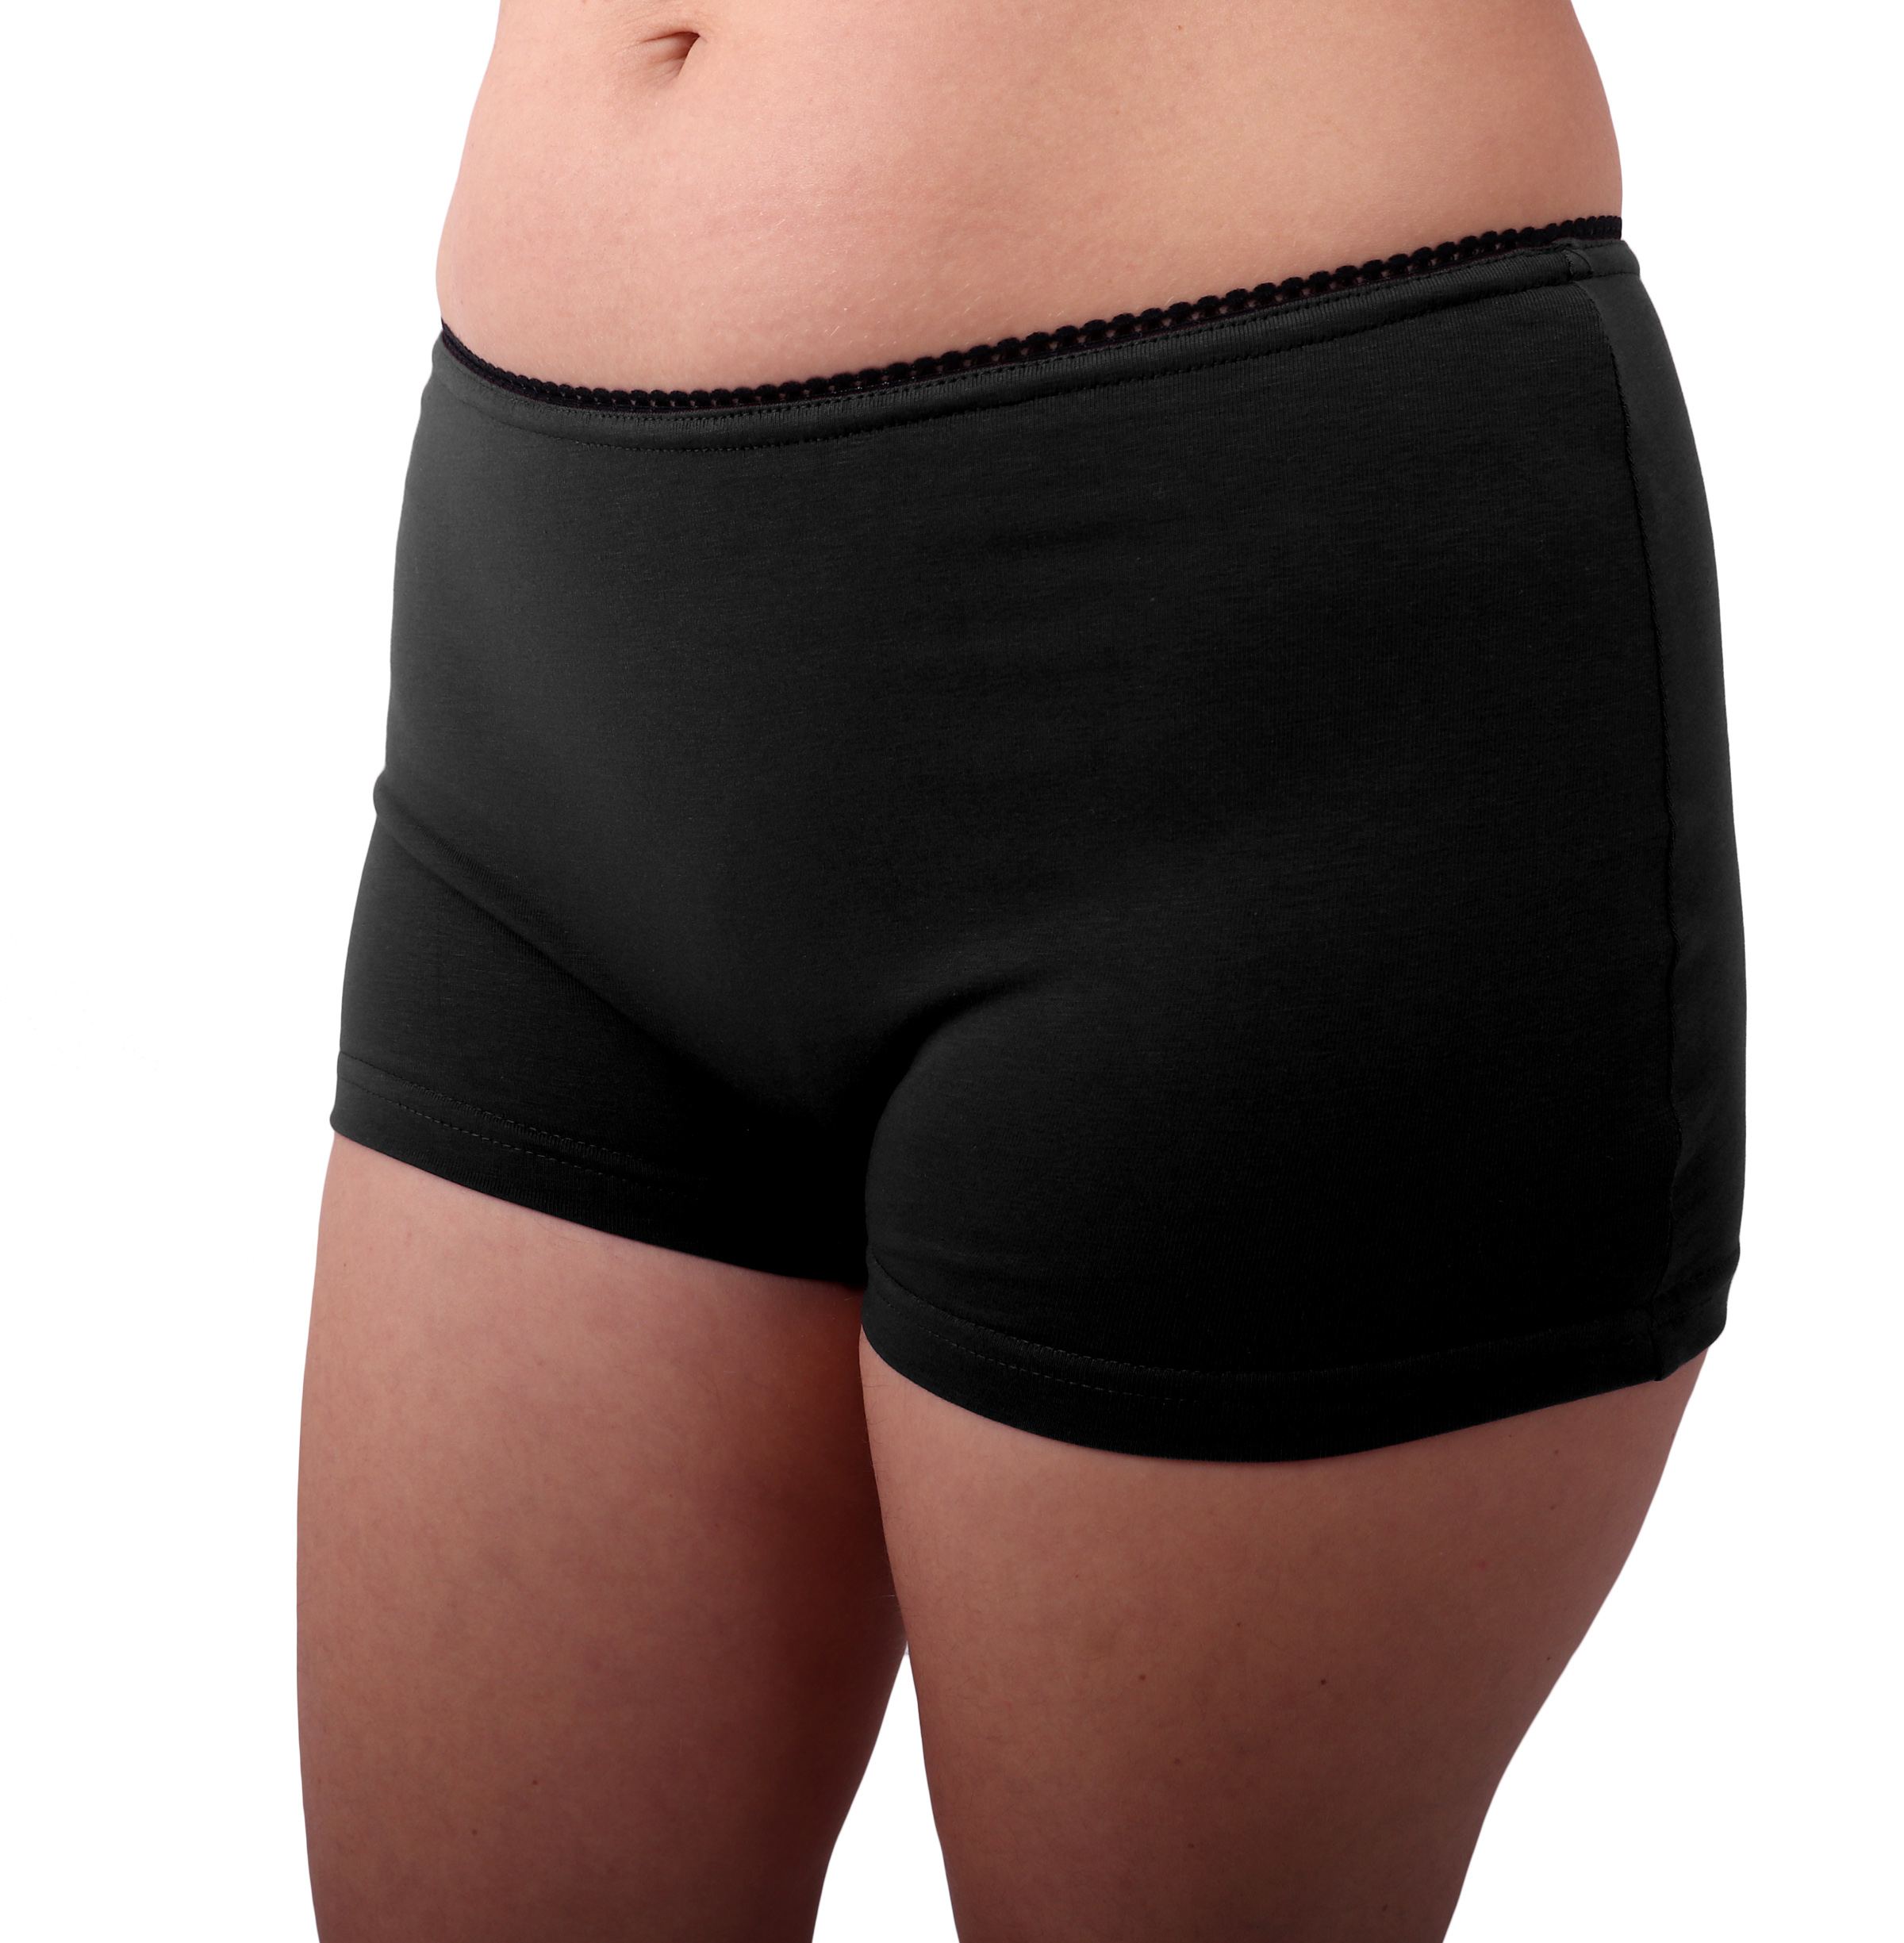 https://cdn.jozanek.cz/images/0/775ccaaad0a23913/100/women-s-cotton-panties-boy-shorts-black.jpg?hash=-2